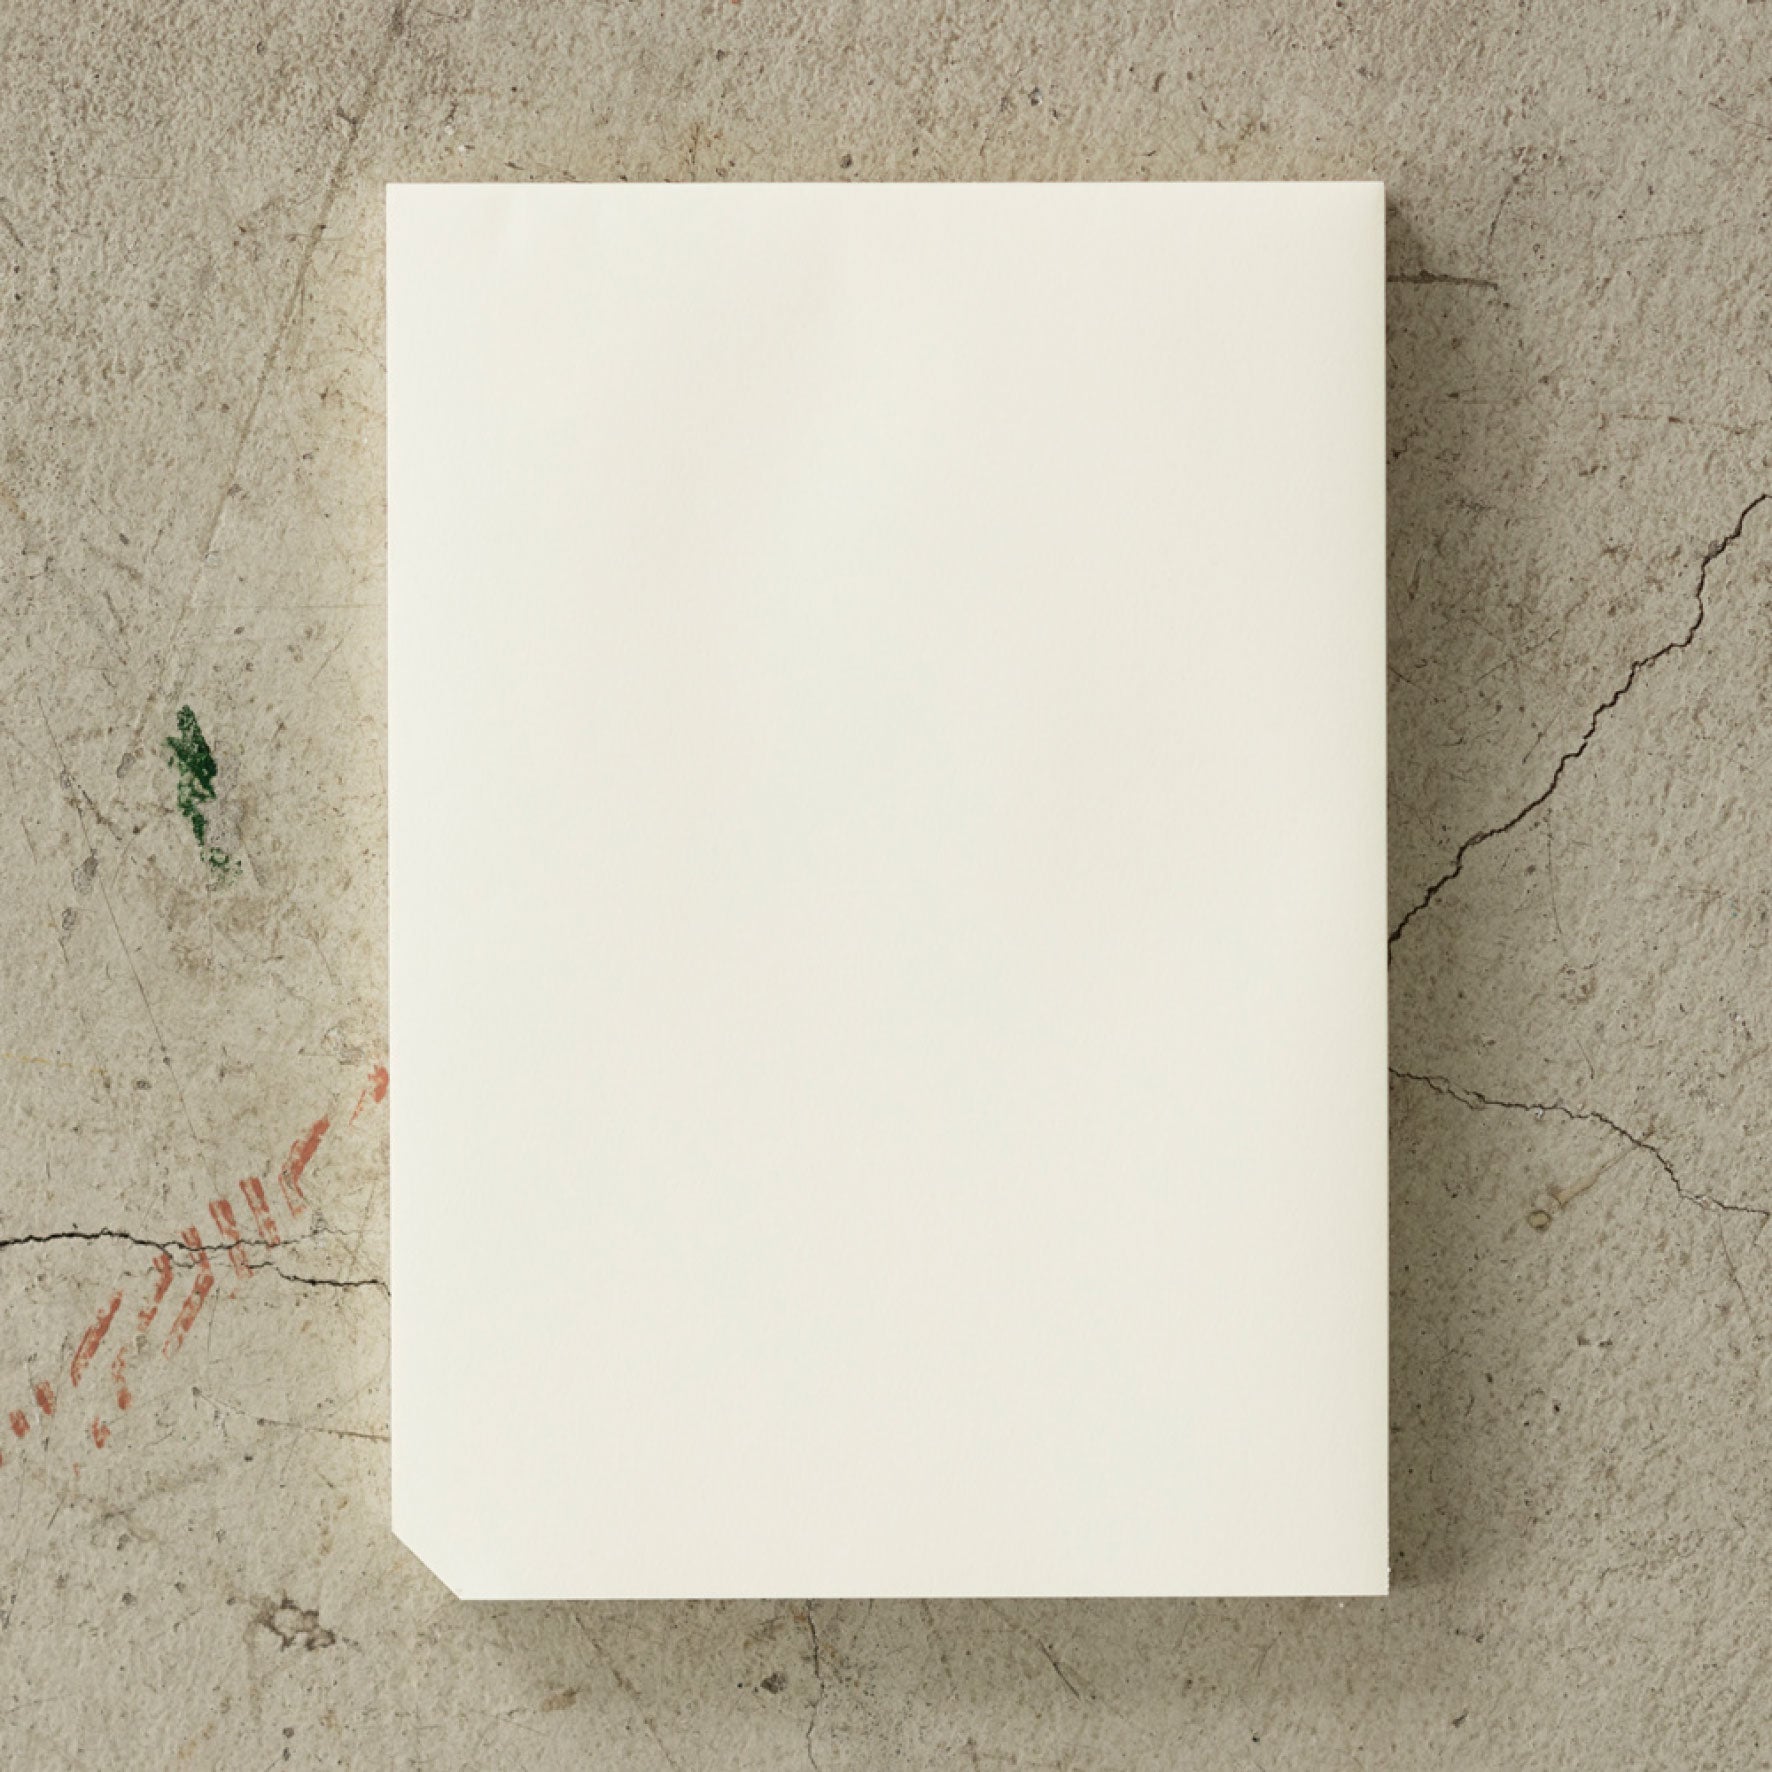 Midori - Notepad - MD Paper - A5 - Blank